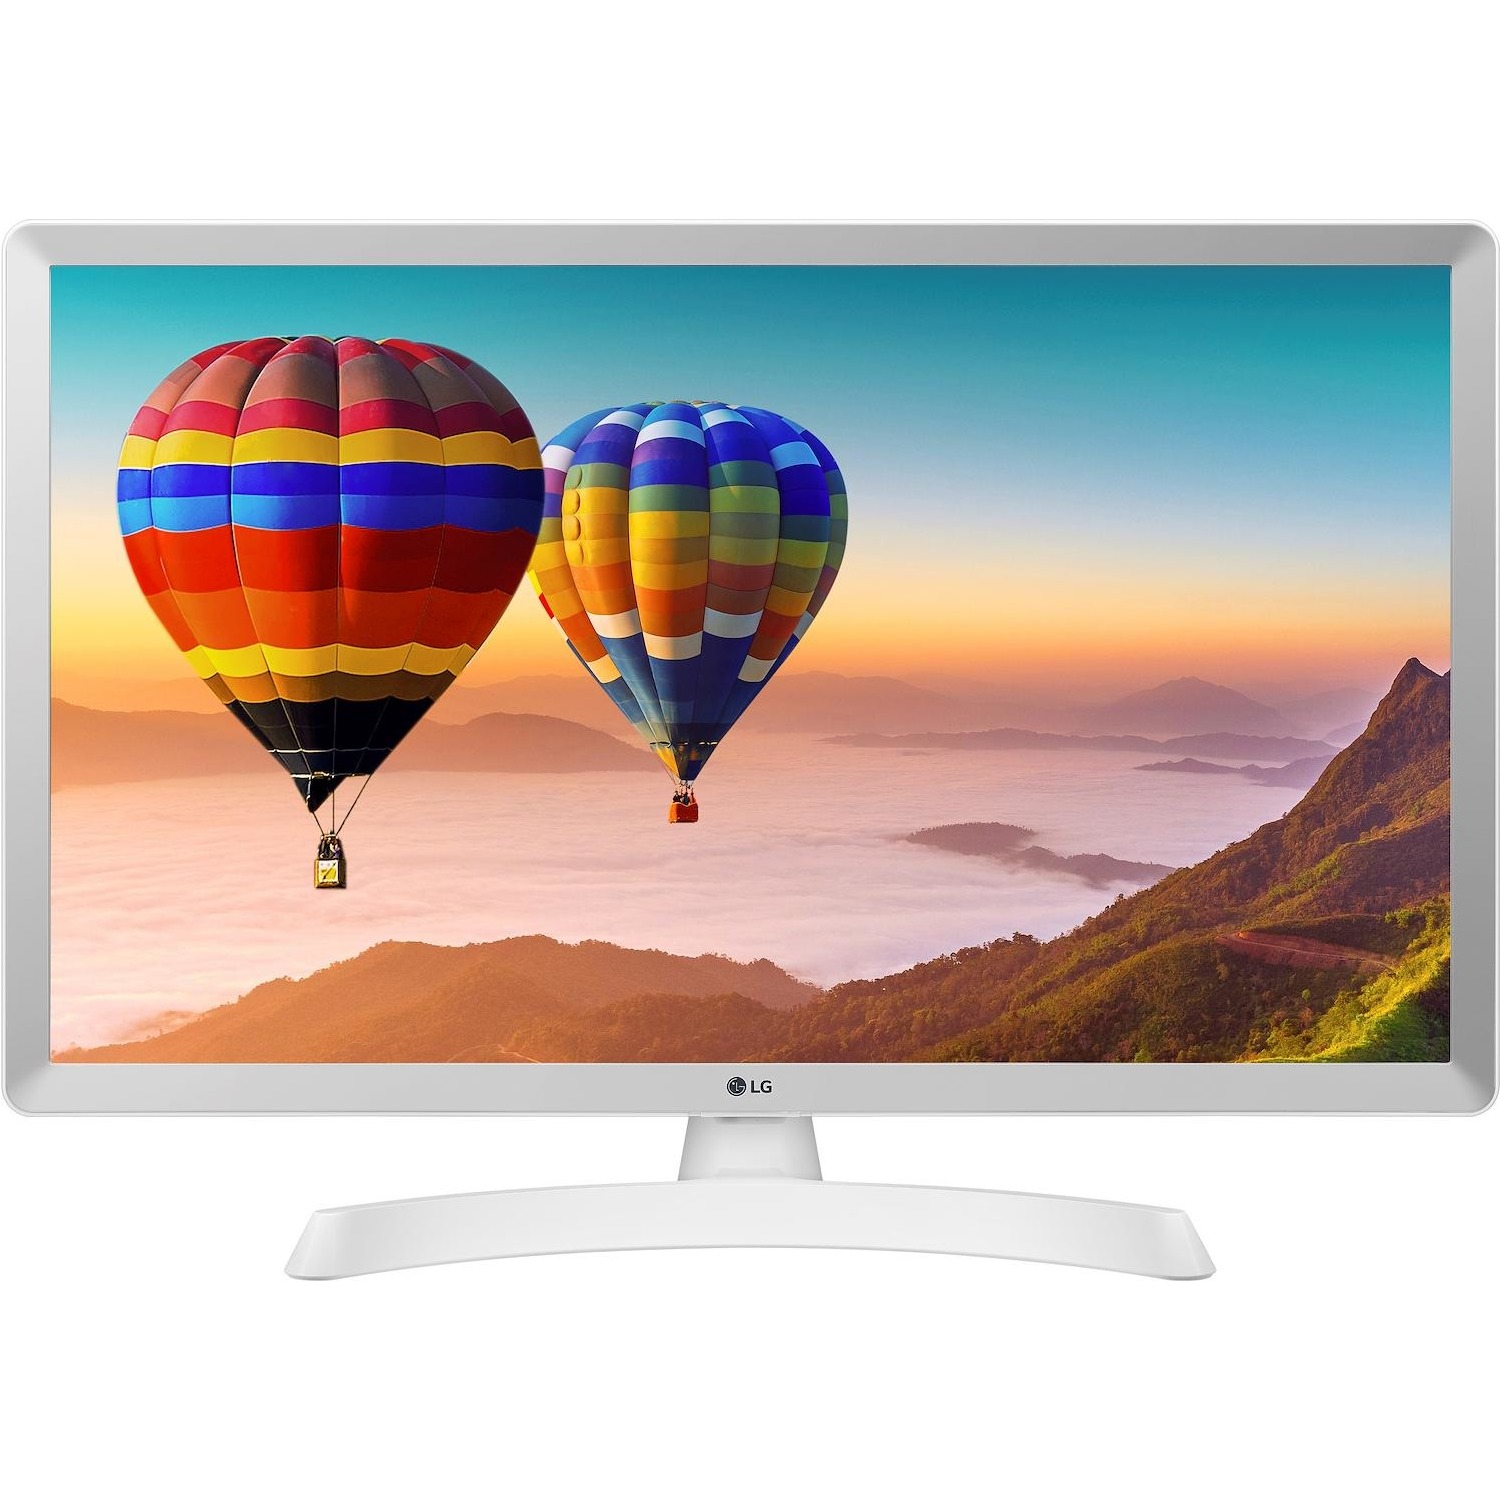 Immagine per TV LED Monitor Smart LG 28TN515S-WZ bianco da DIMOStore